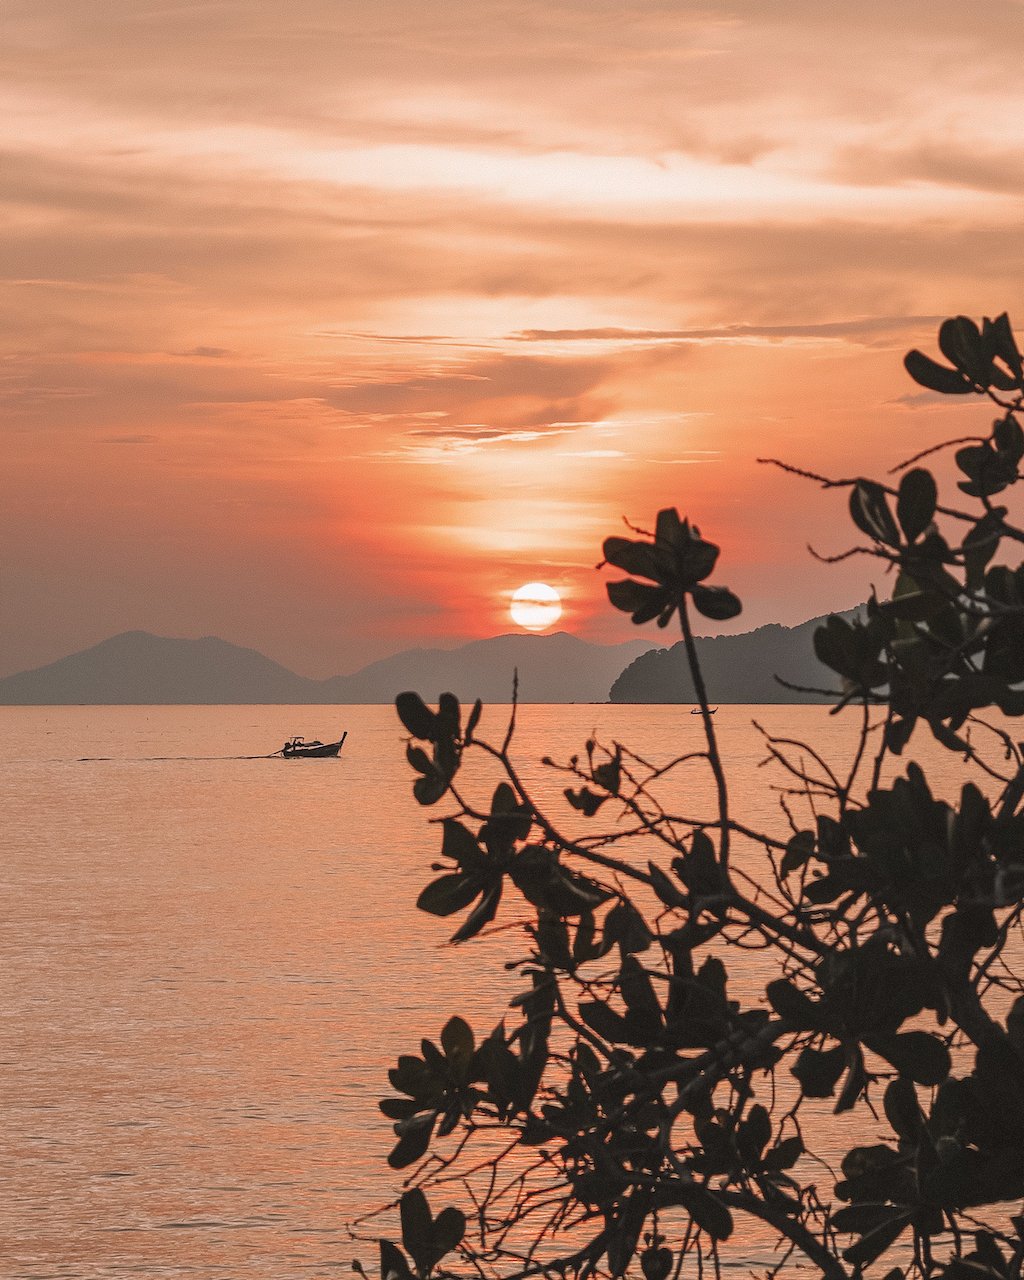 Amazing sunset on the water - Ao Nang - Krabi - Thailand